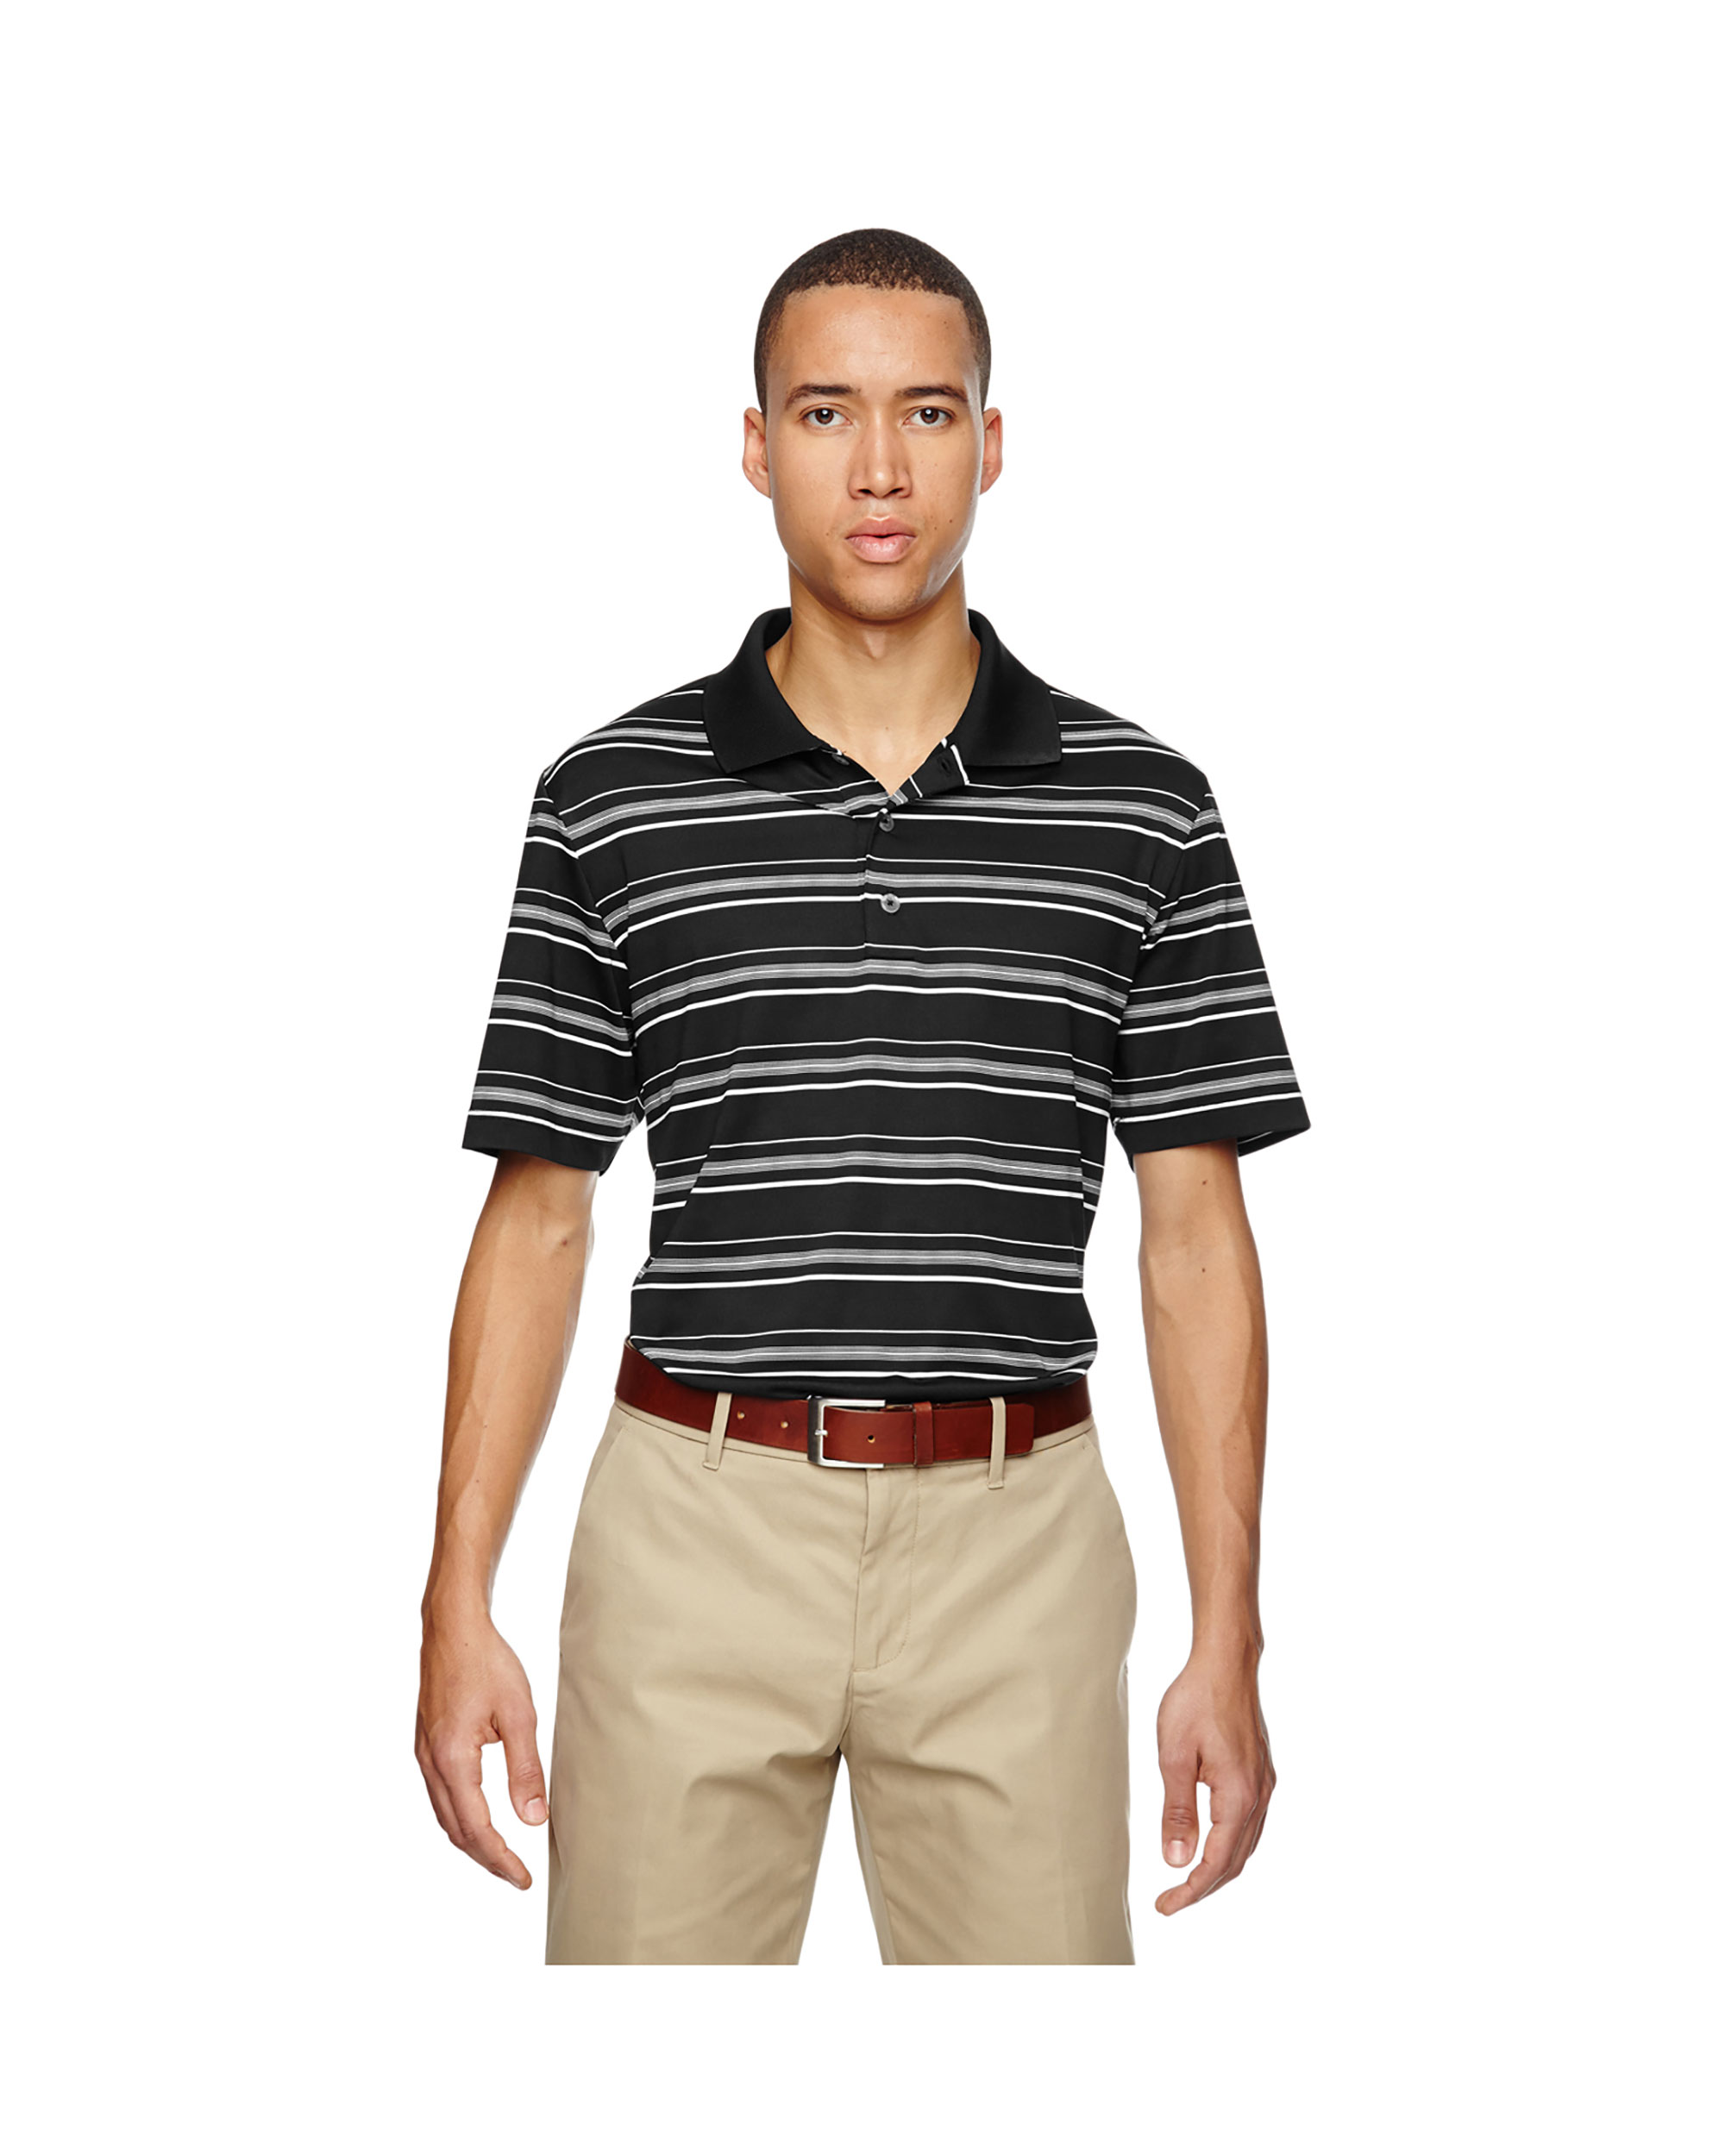 Adidas Men's Pure Motion Textured Stripe Polo Shirt